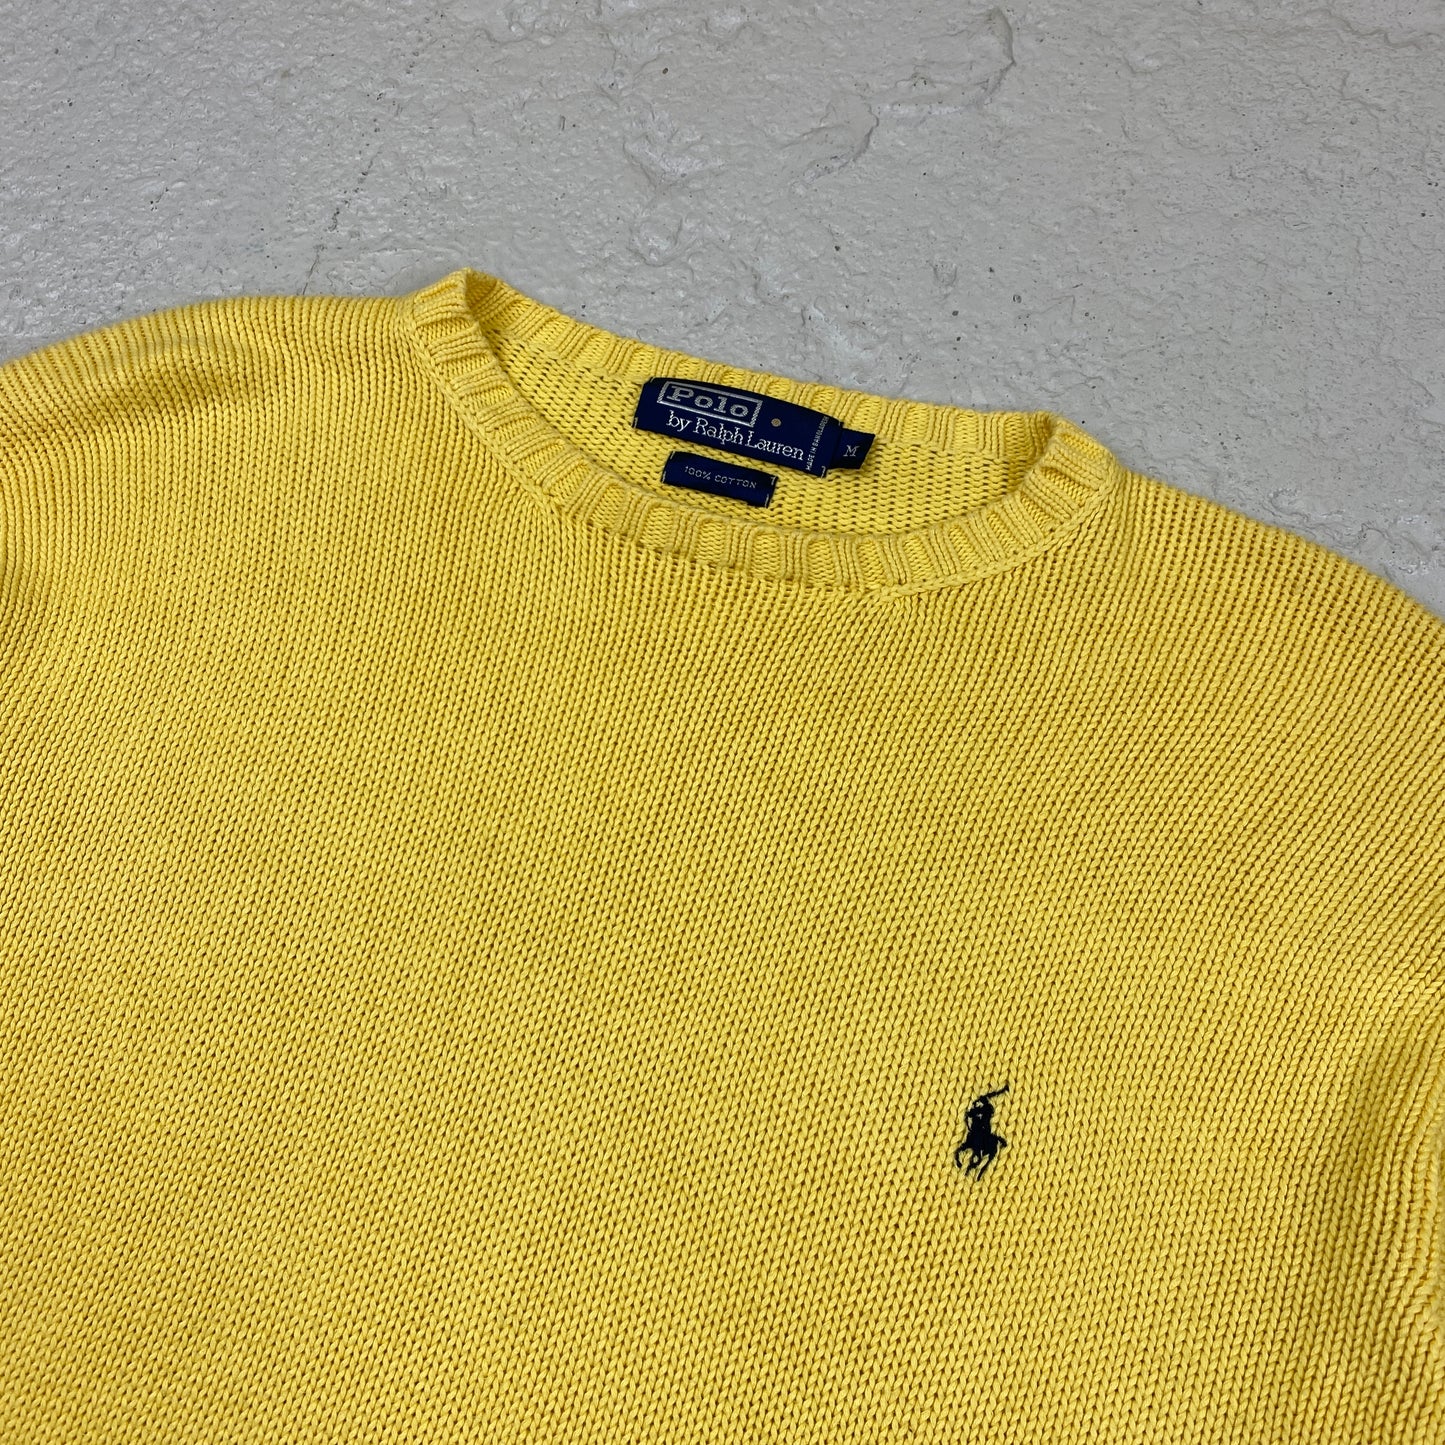 Polo Ralph Lauren knit sweater (M-L)